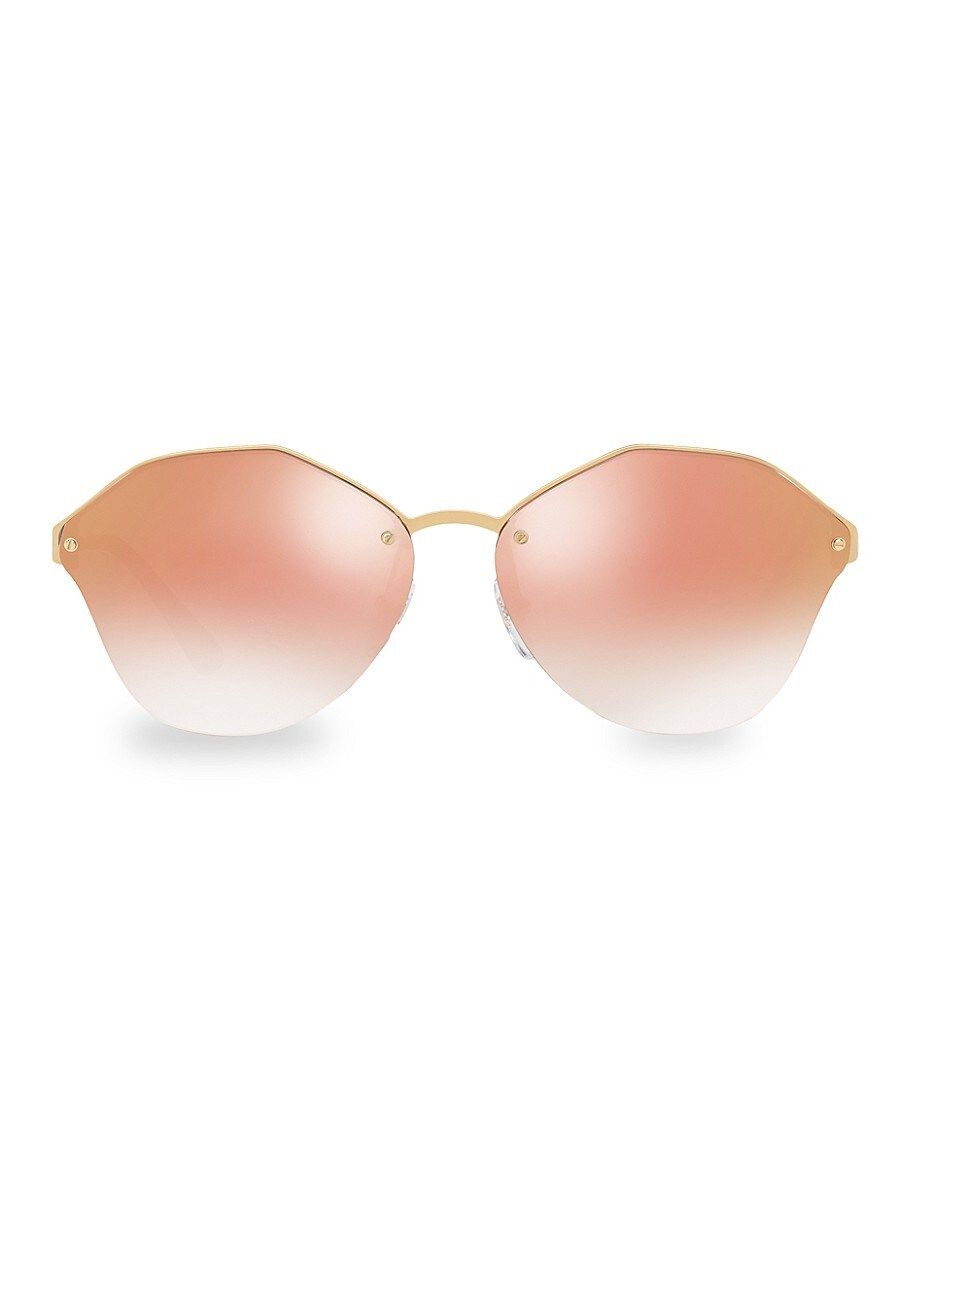 Prada Women's 66MM Mirrored Sunglasses - Gold Pink | Saks Fifth Avenue